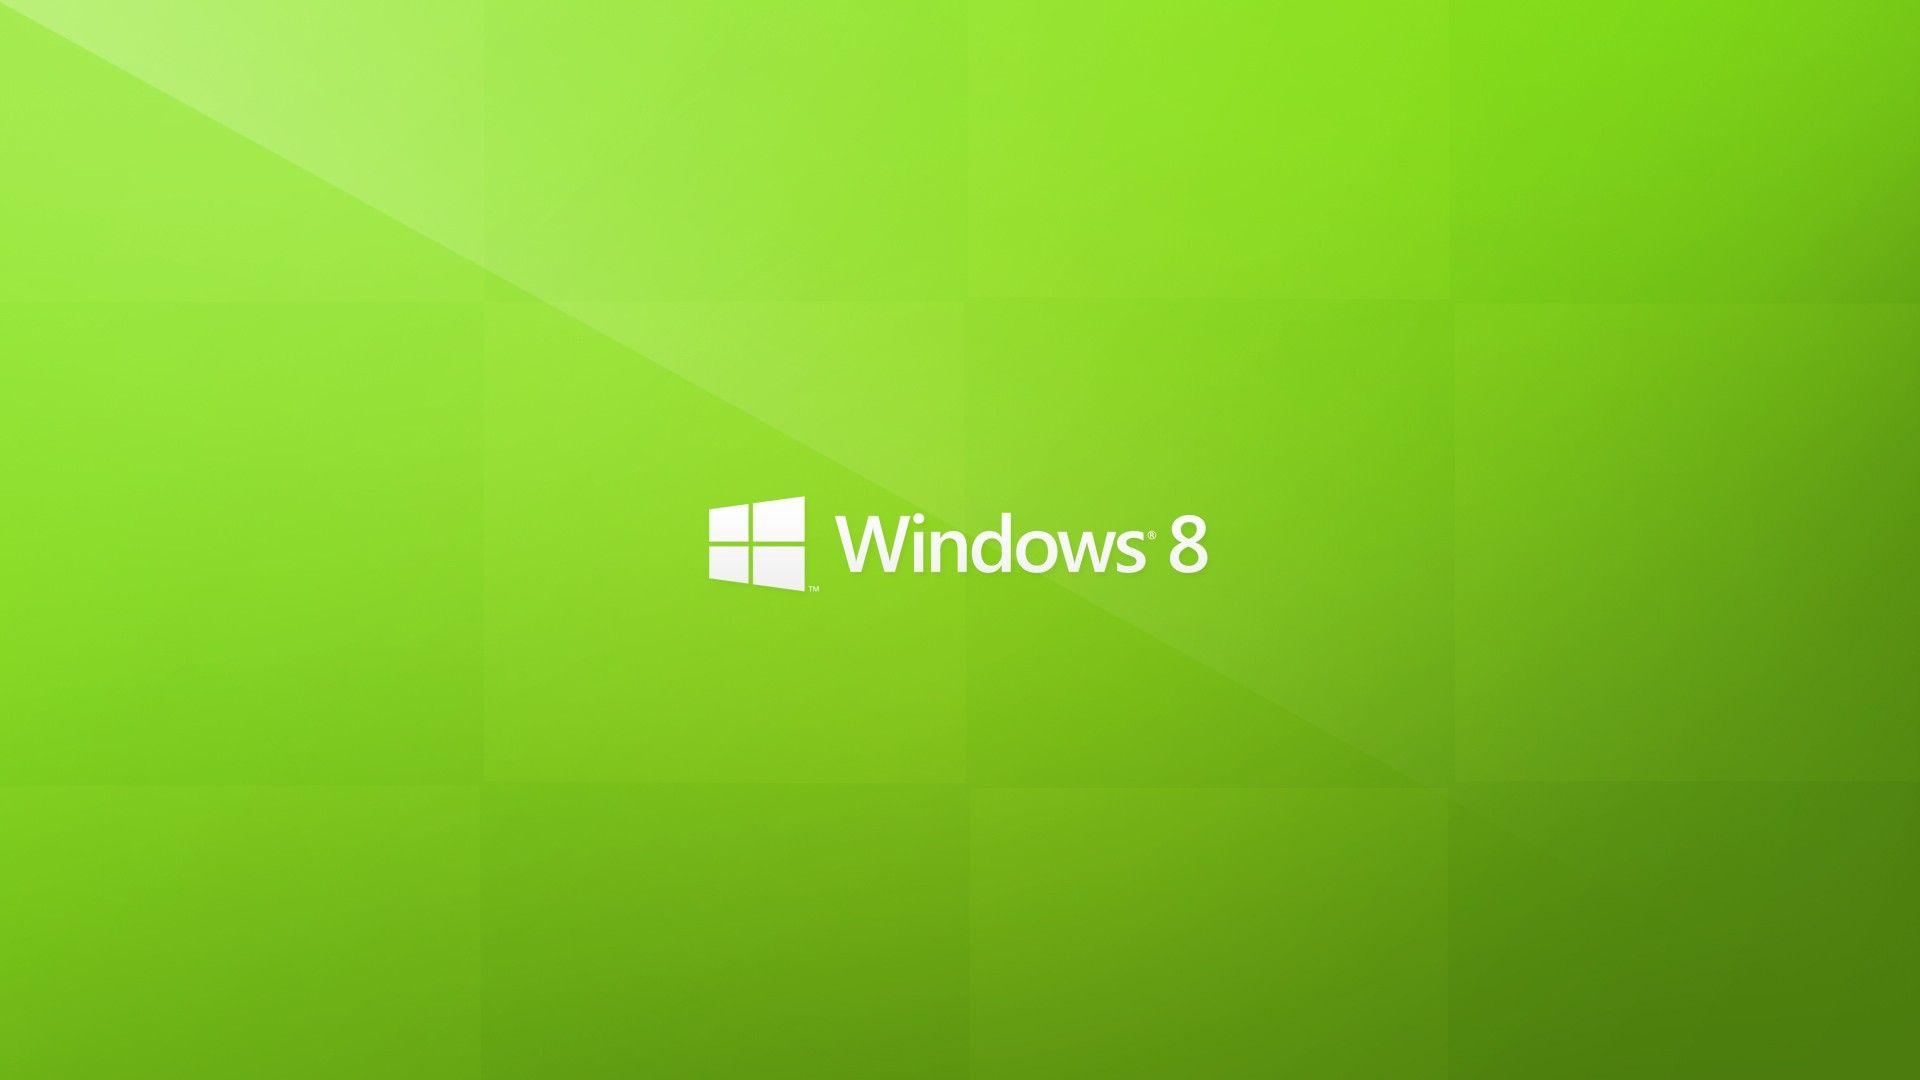 Lime Green Windows Logo - Lime Green Windows 8 - Wallpaper #38086